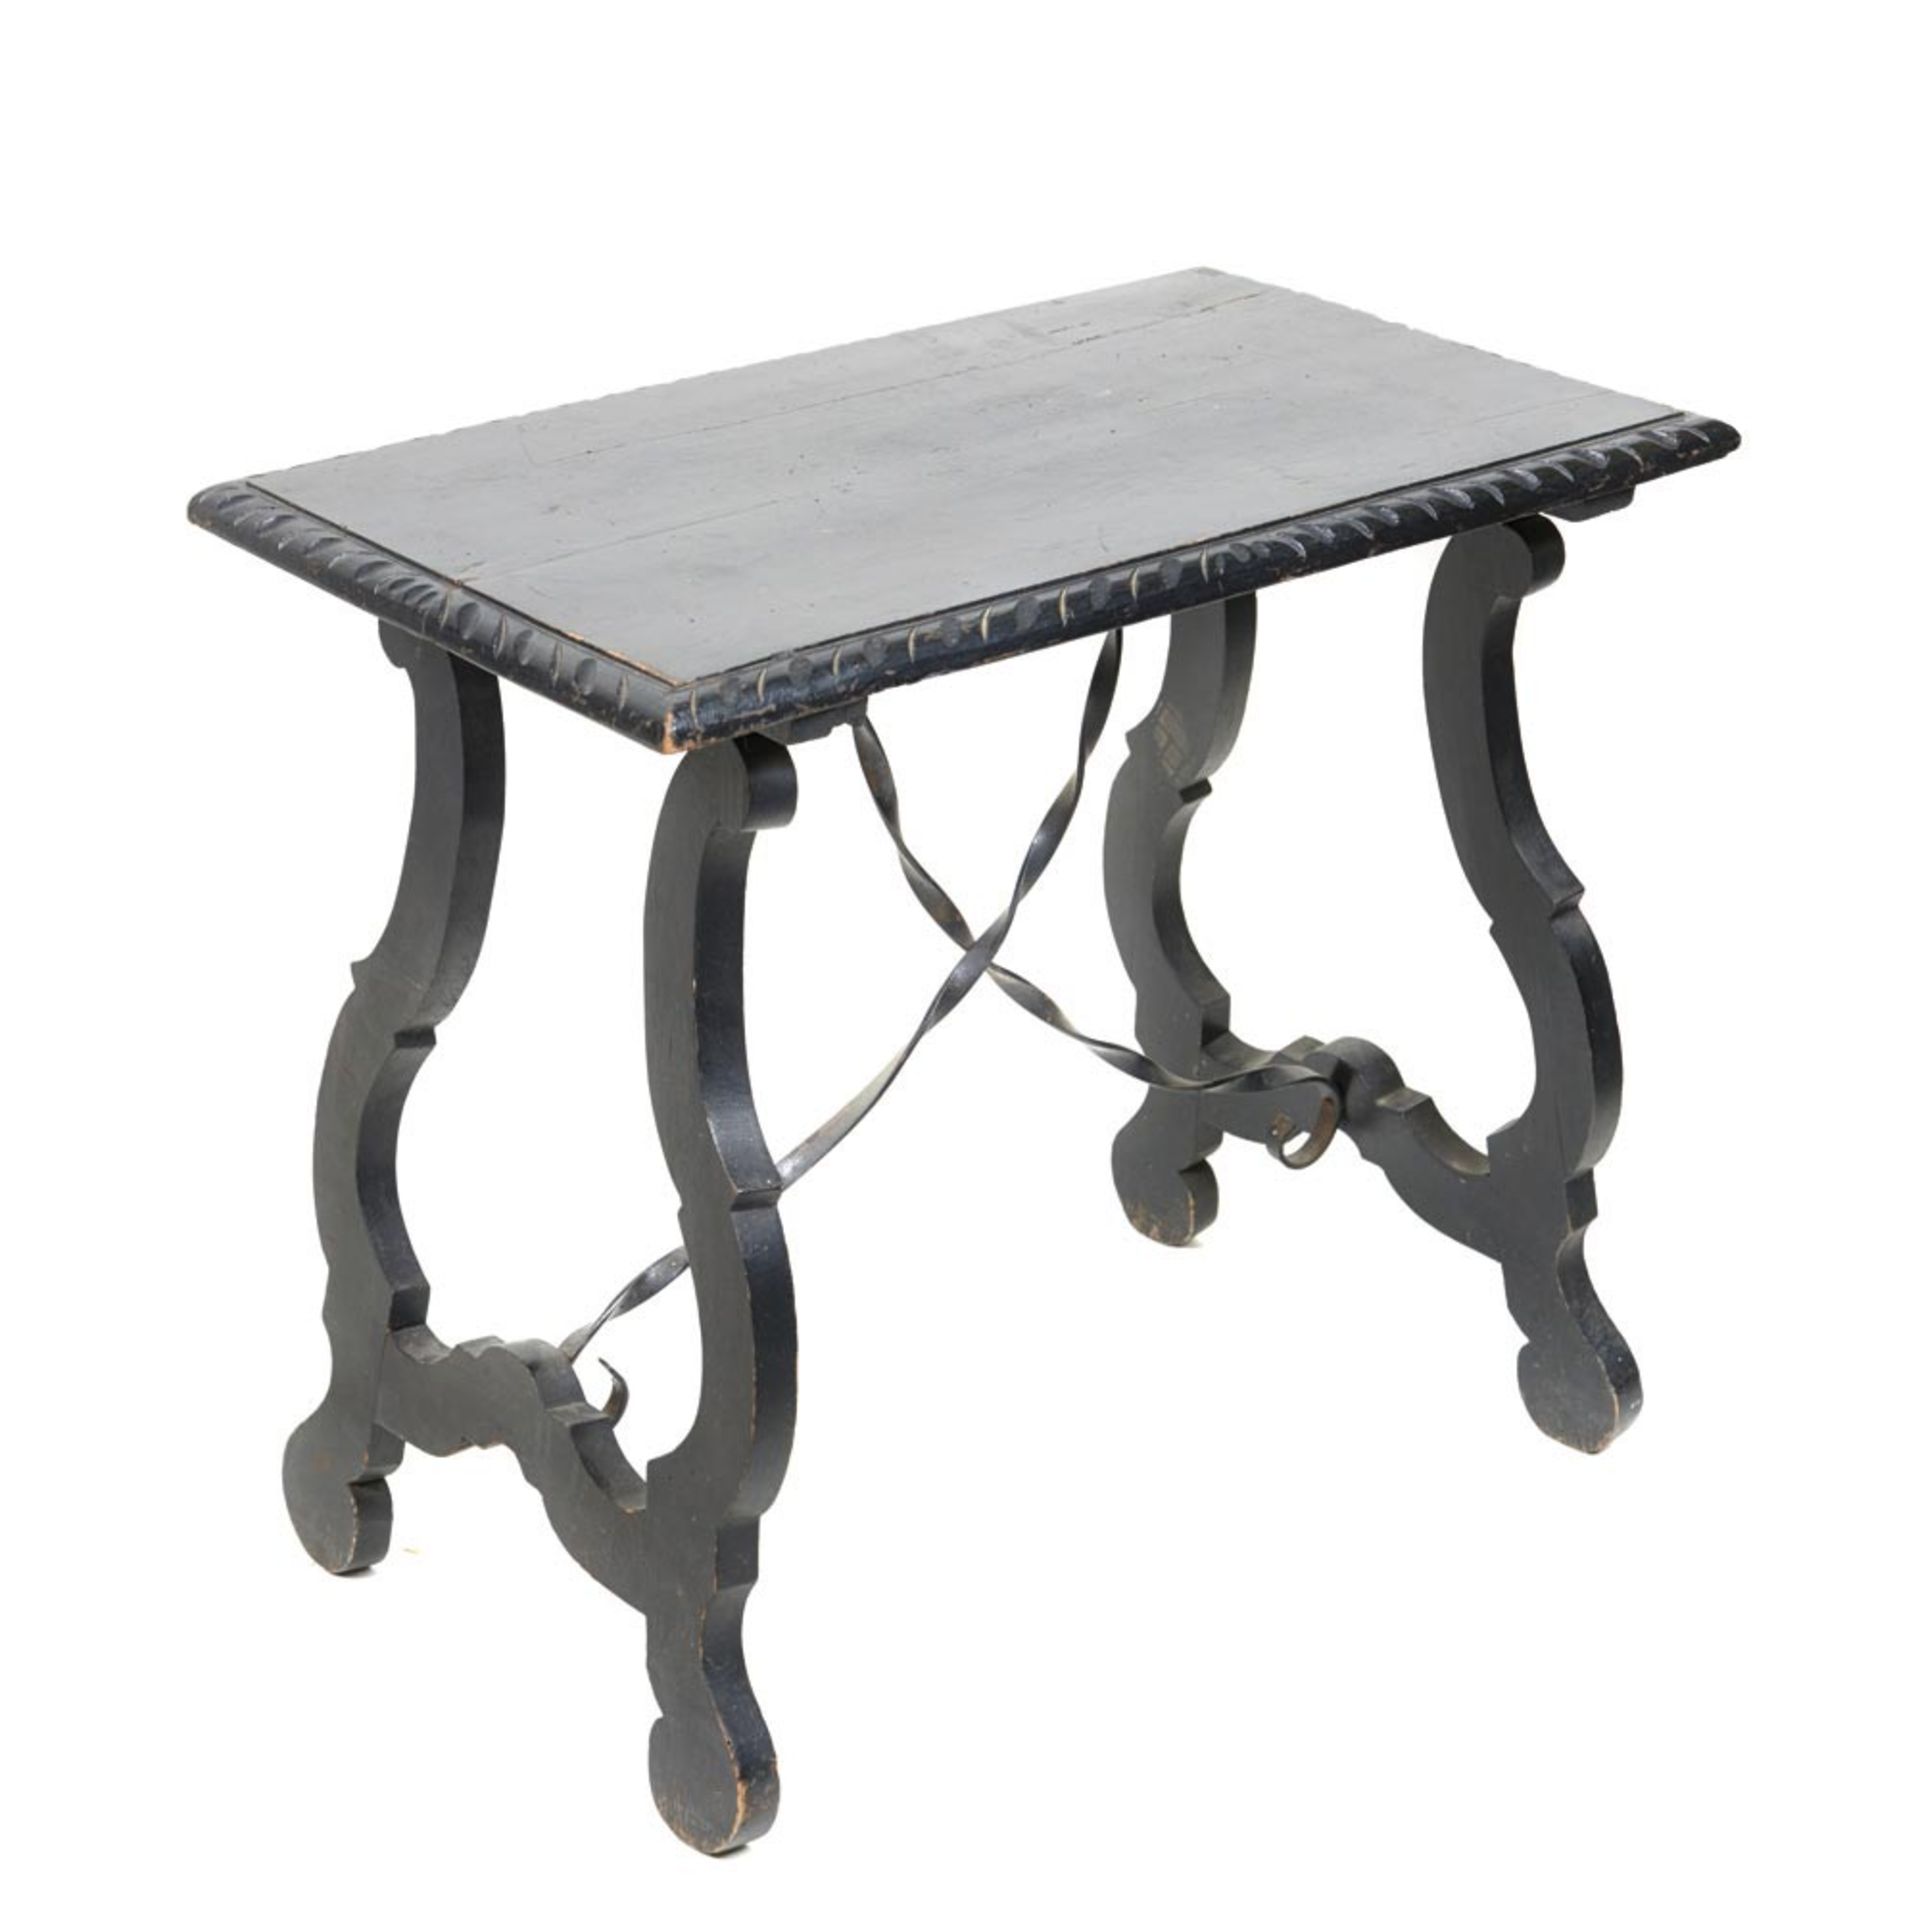 Spanish carved wood and iron table. Mesa tipo castellana en madera tallada con patas de lira - Bild 3 aus 3